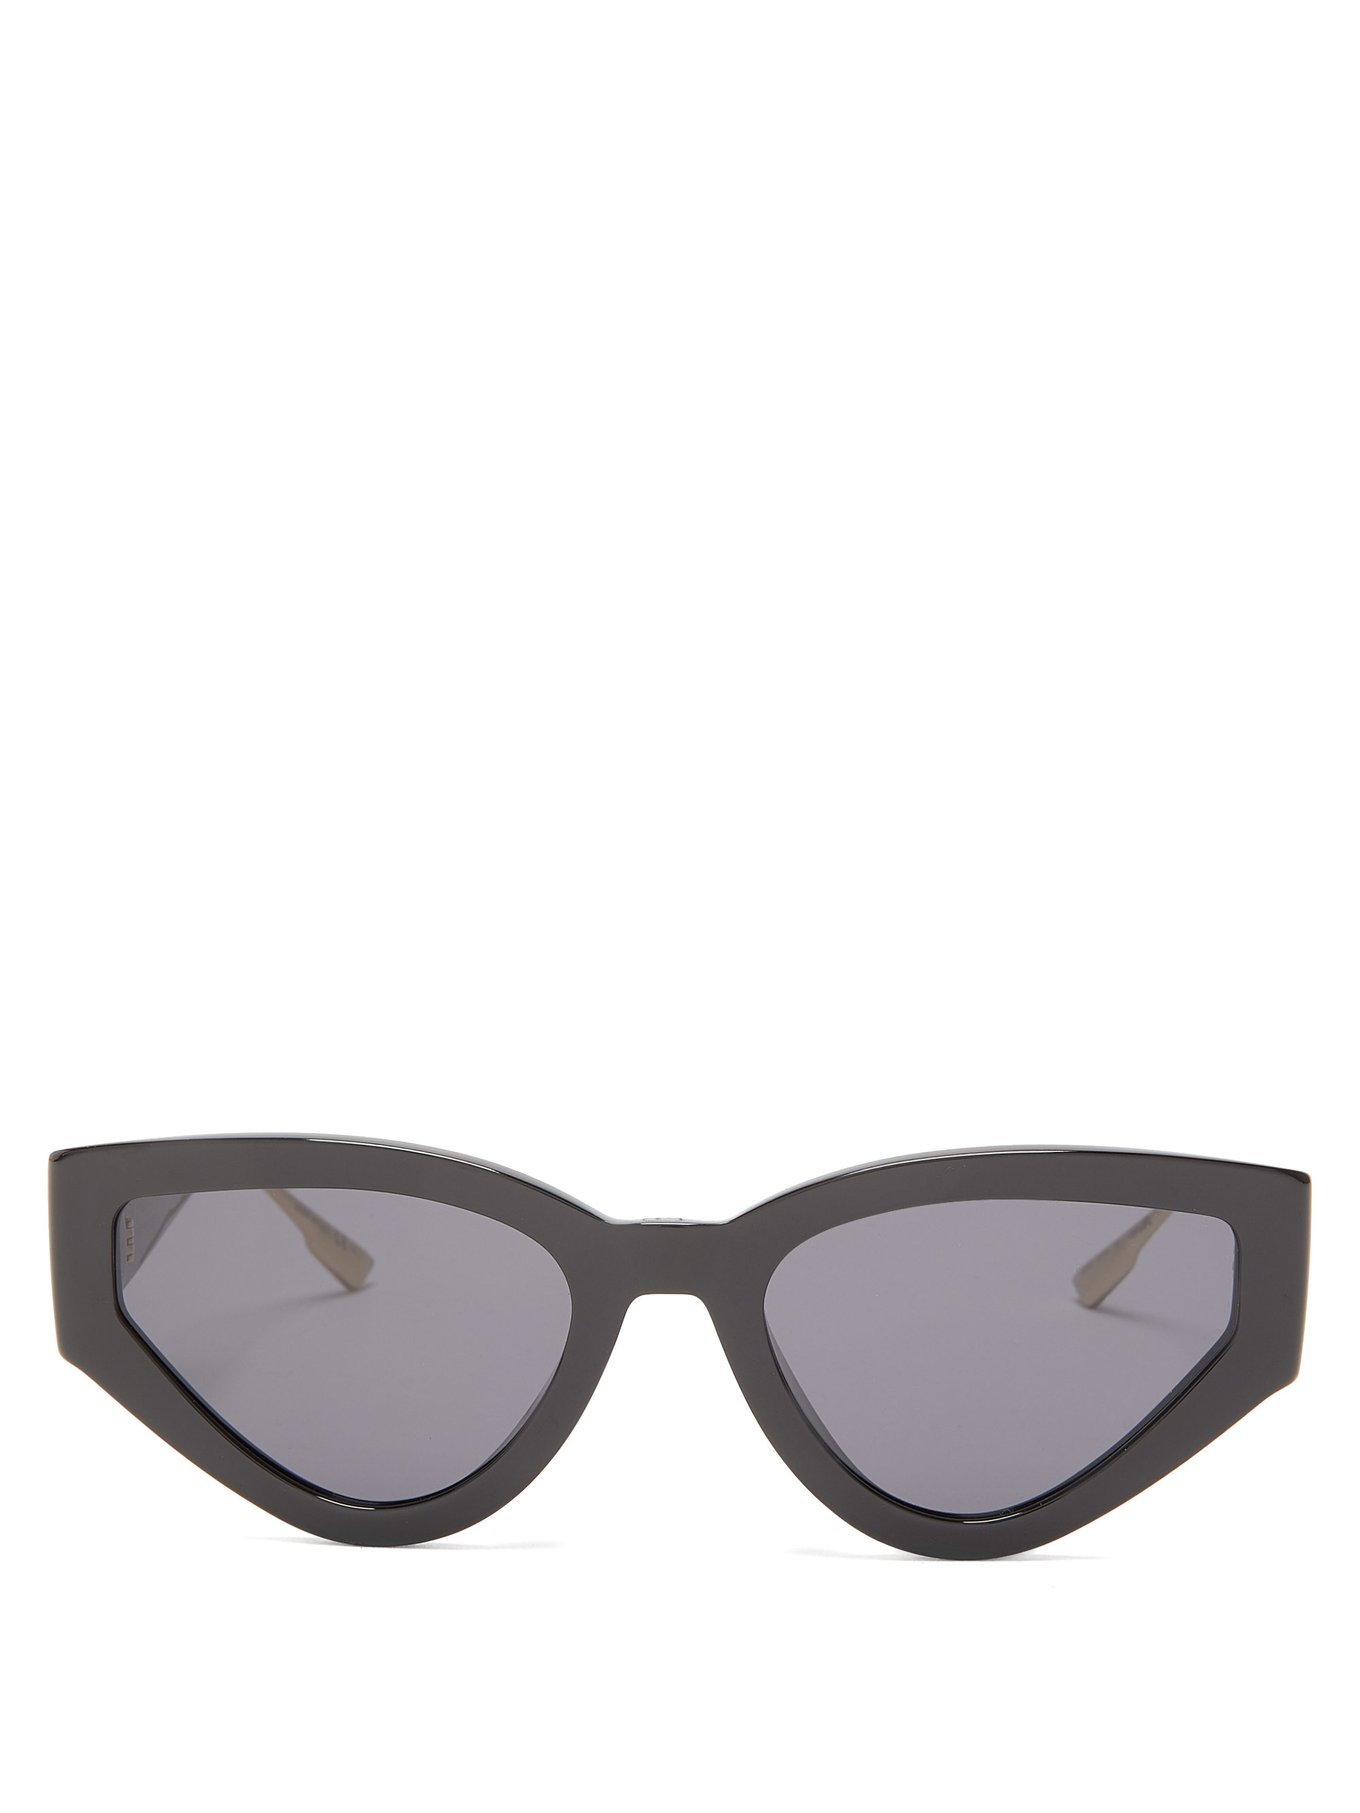 dior cat eye sunglasses black